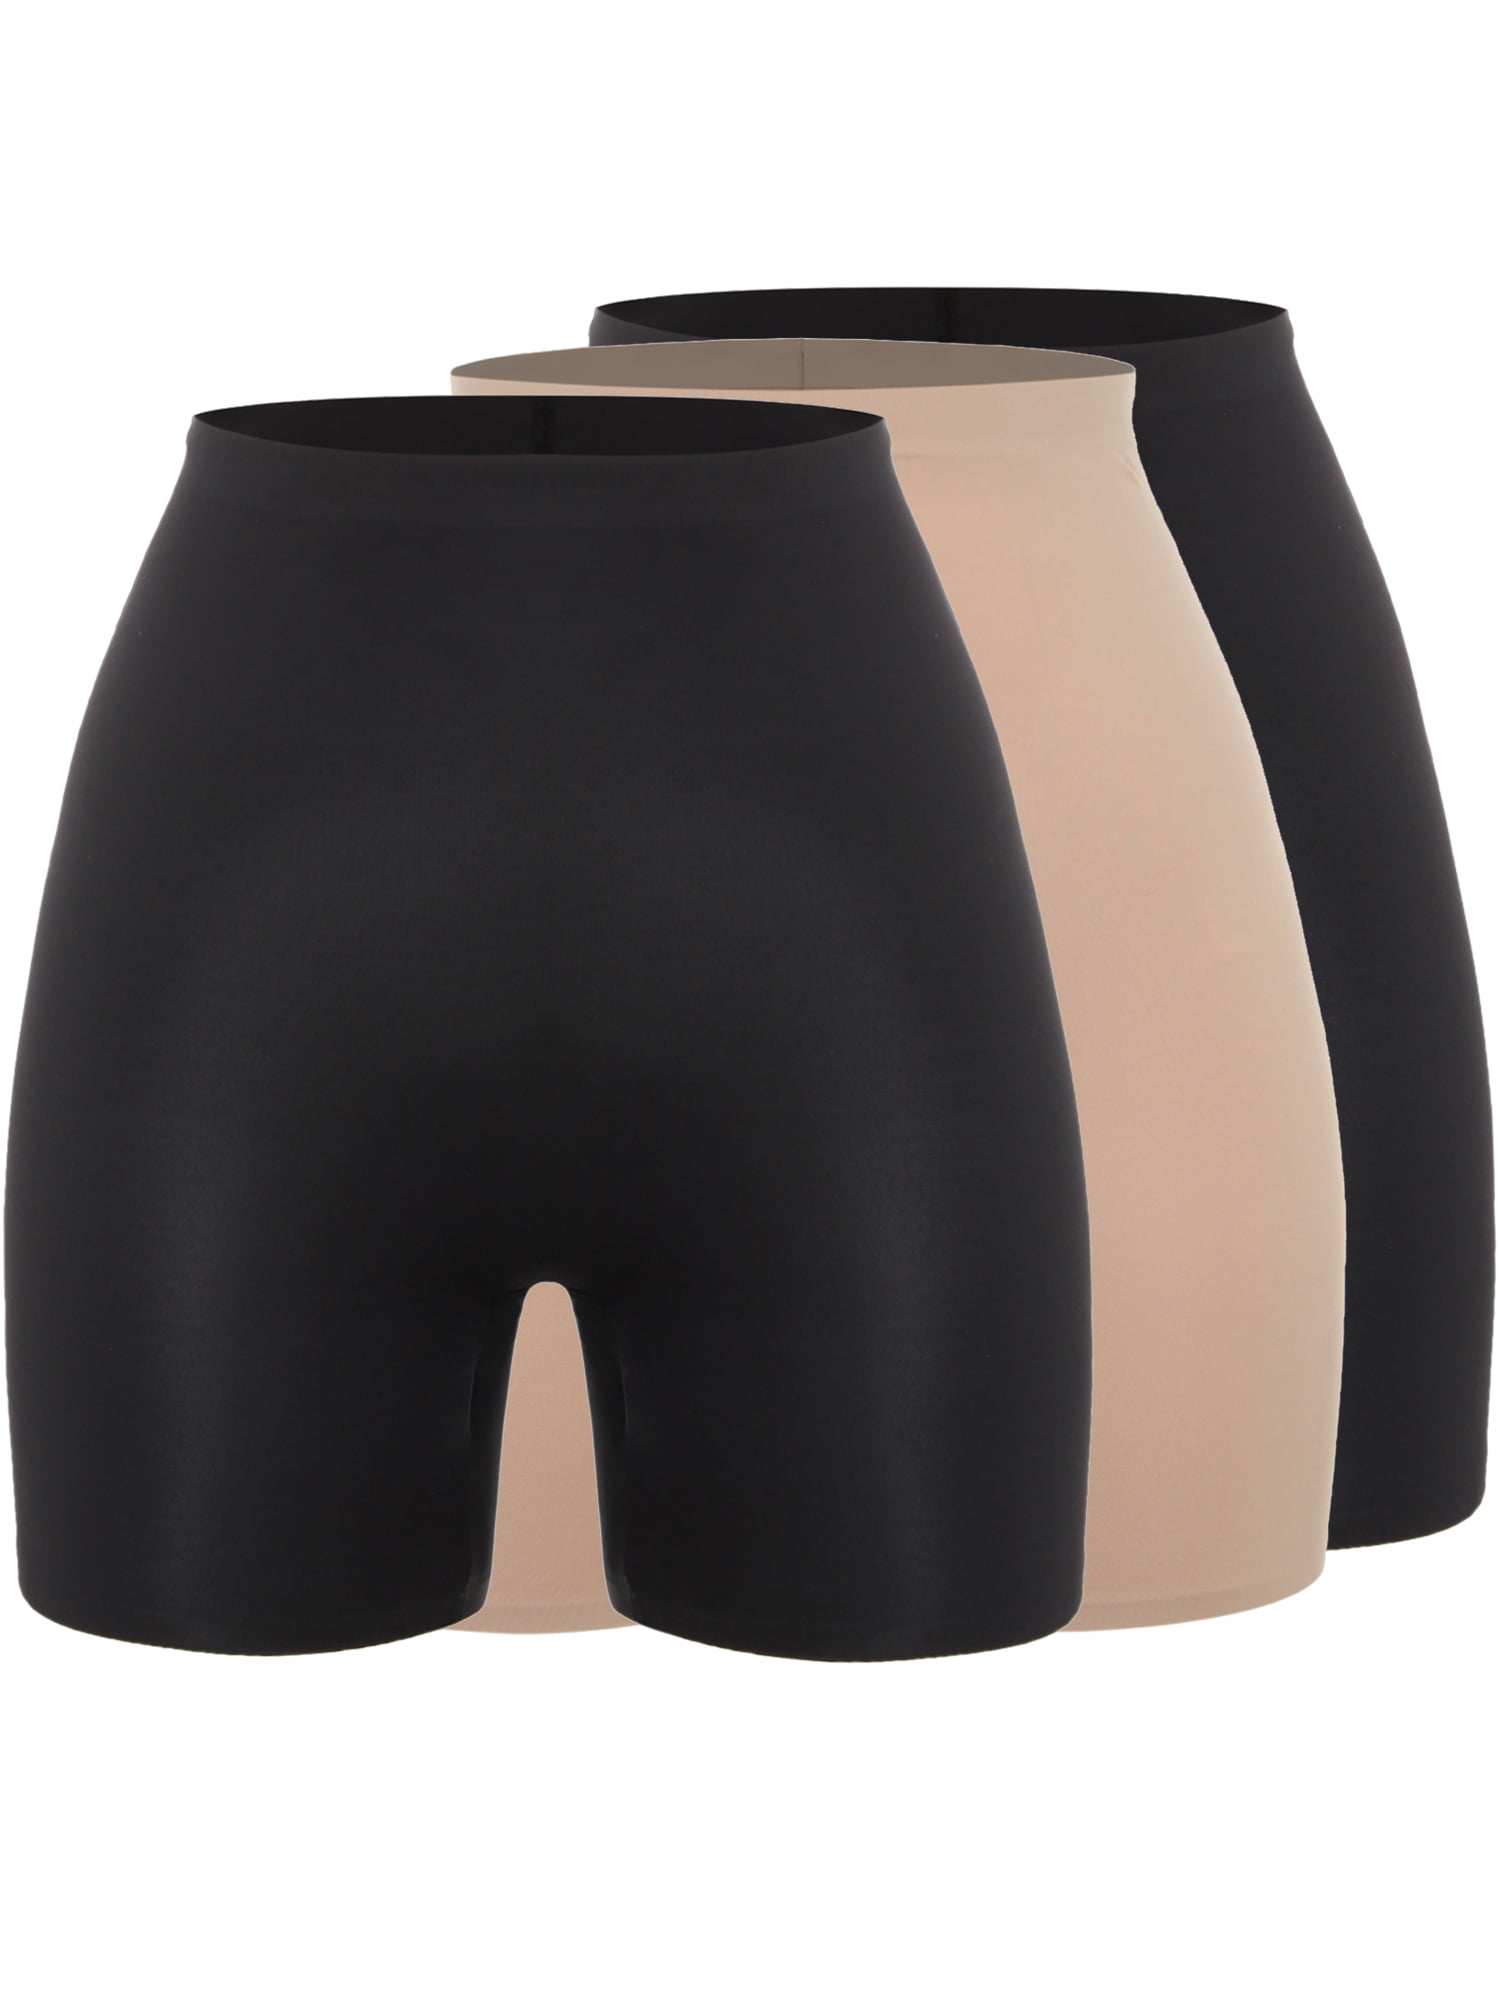  Seamless Shaping Boyshorts Panties For Women Tummy Control Shapewear  Under Dress Slip Shorts Underwear